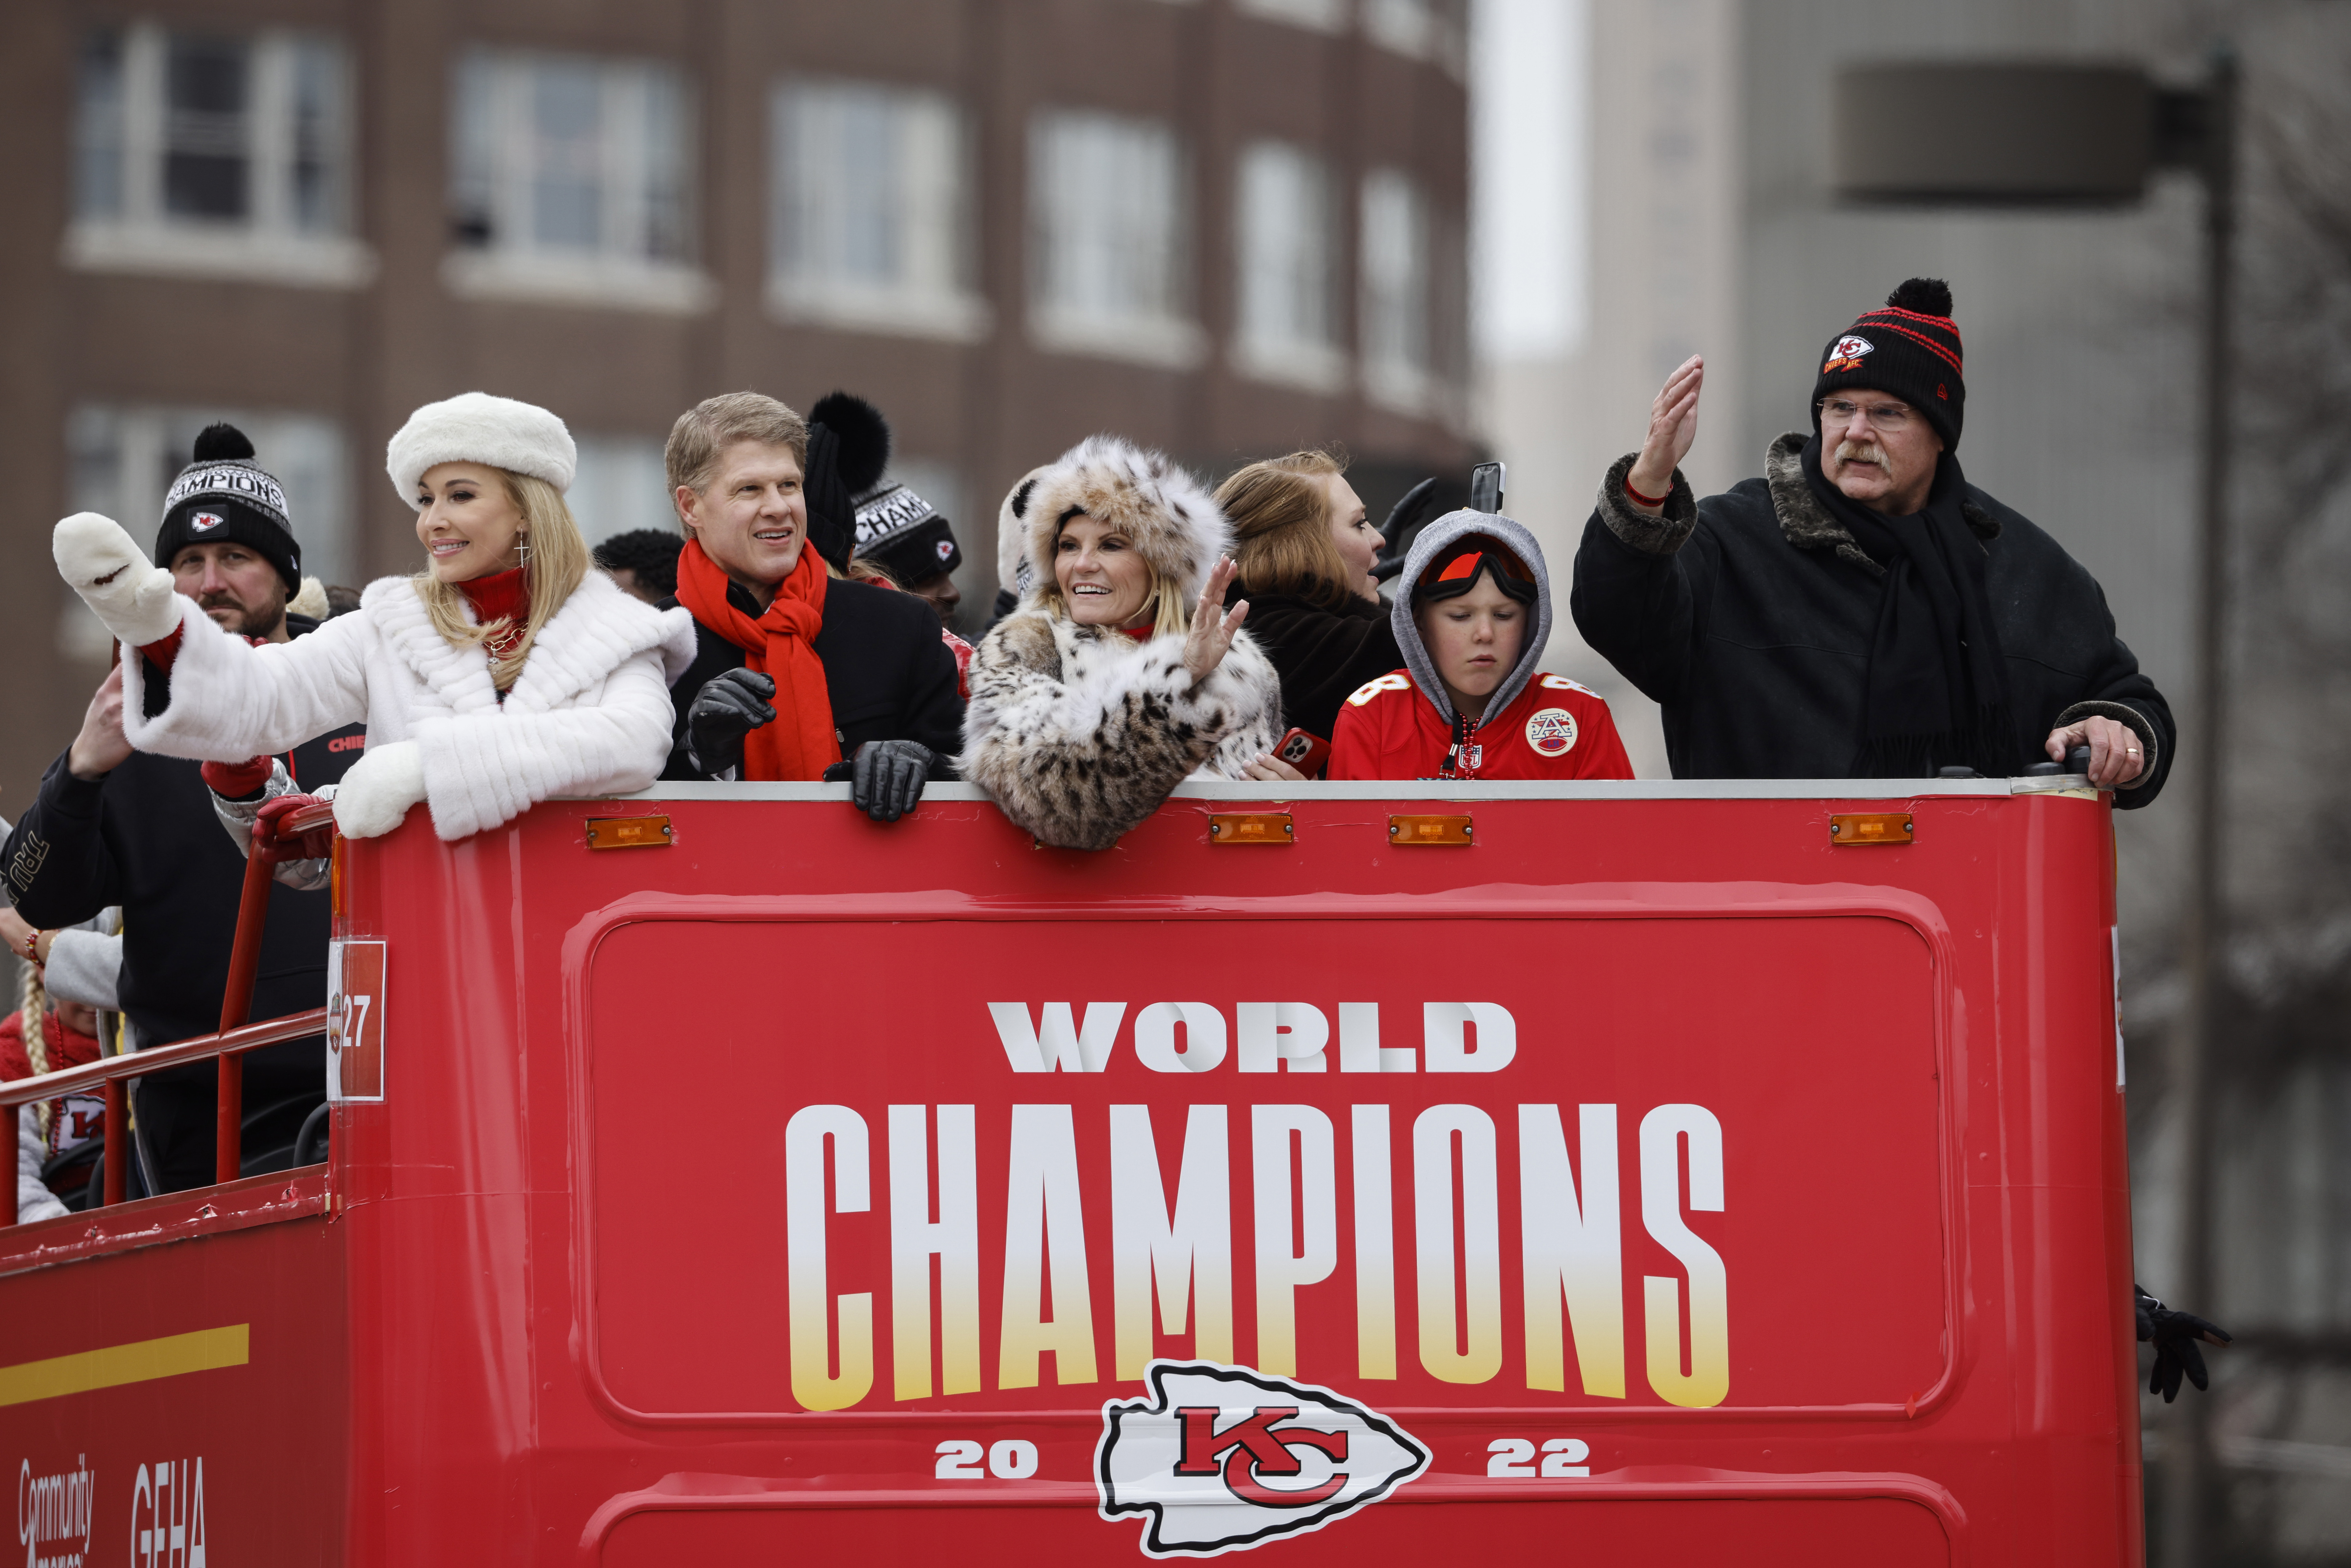 Kansas City celebrates Chiefs' Super Bowl win: 'Our own dynasty